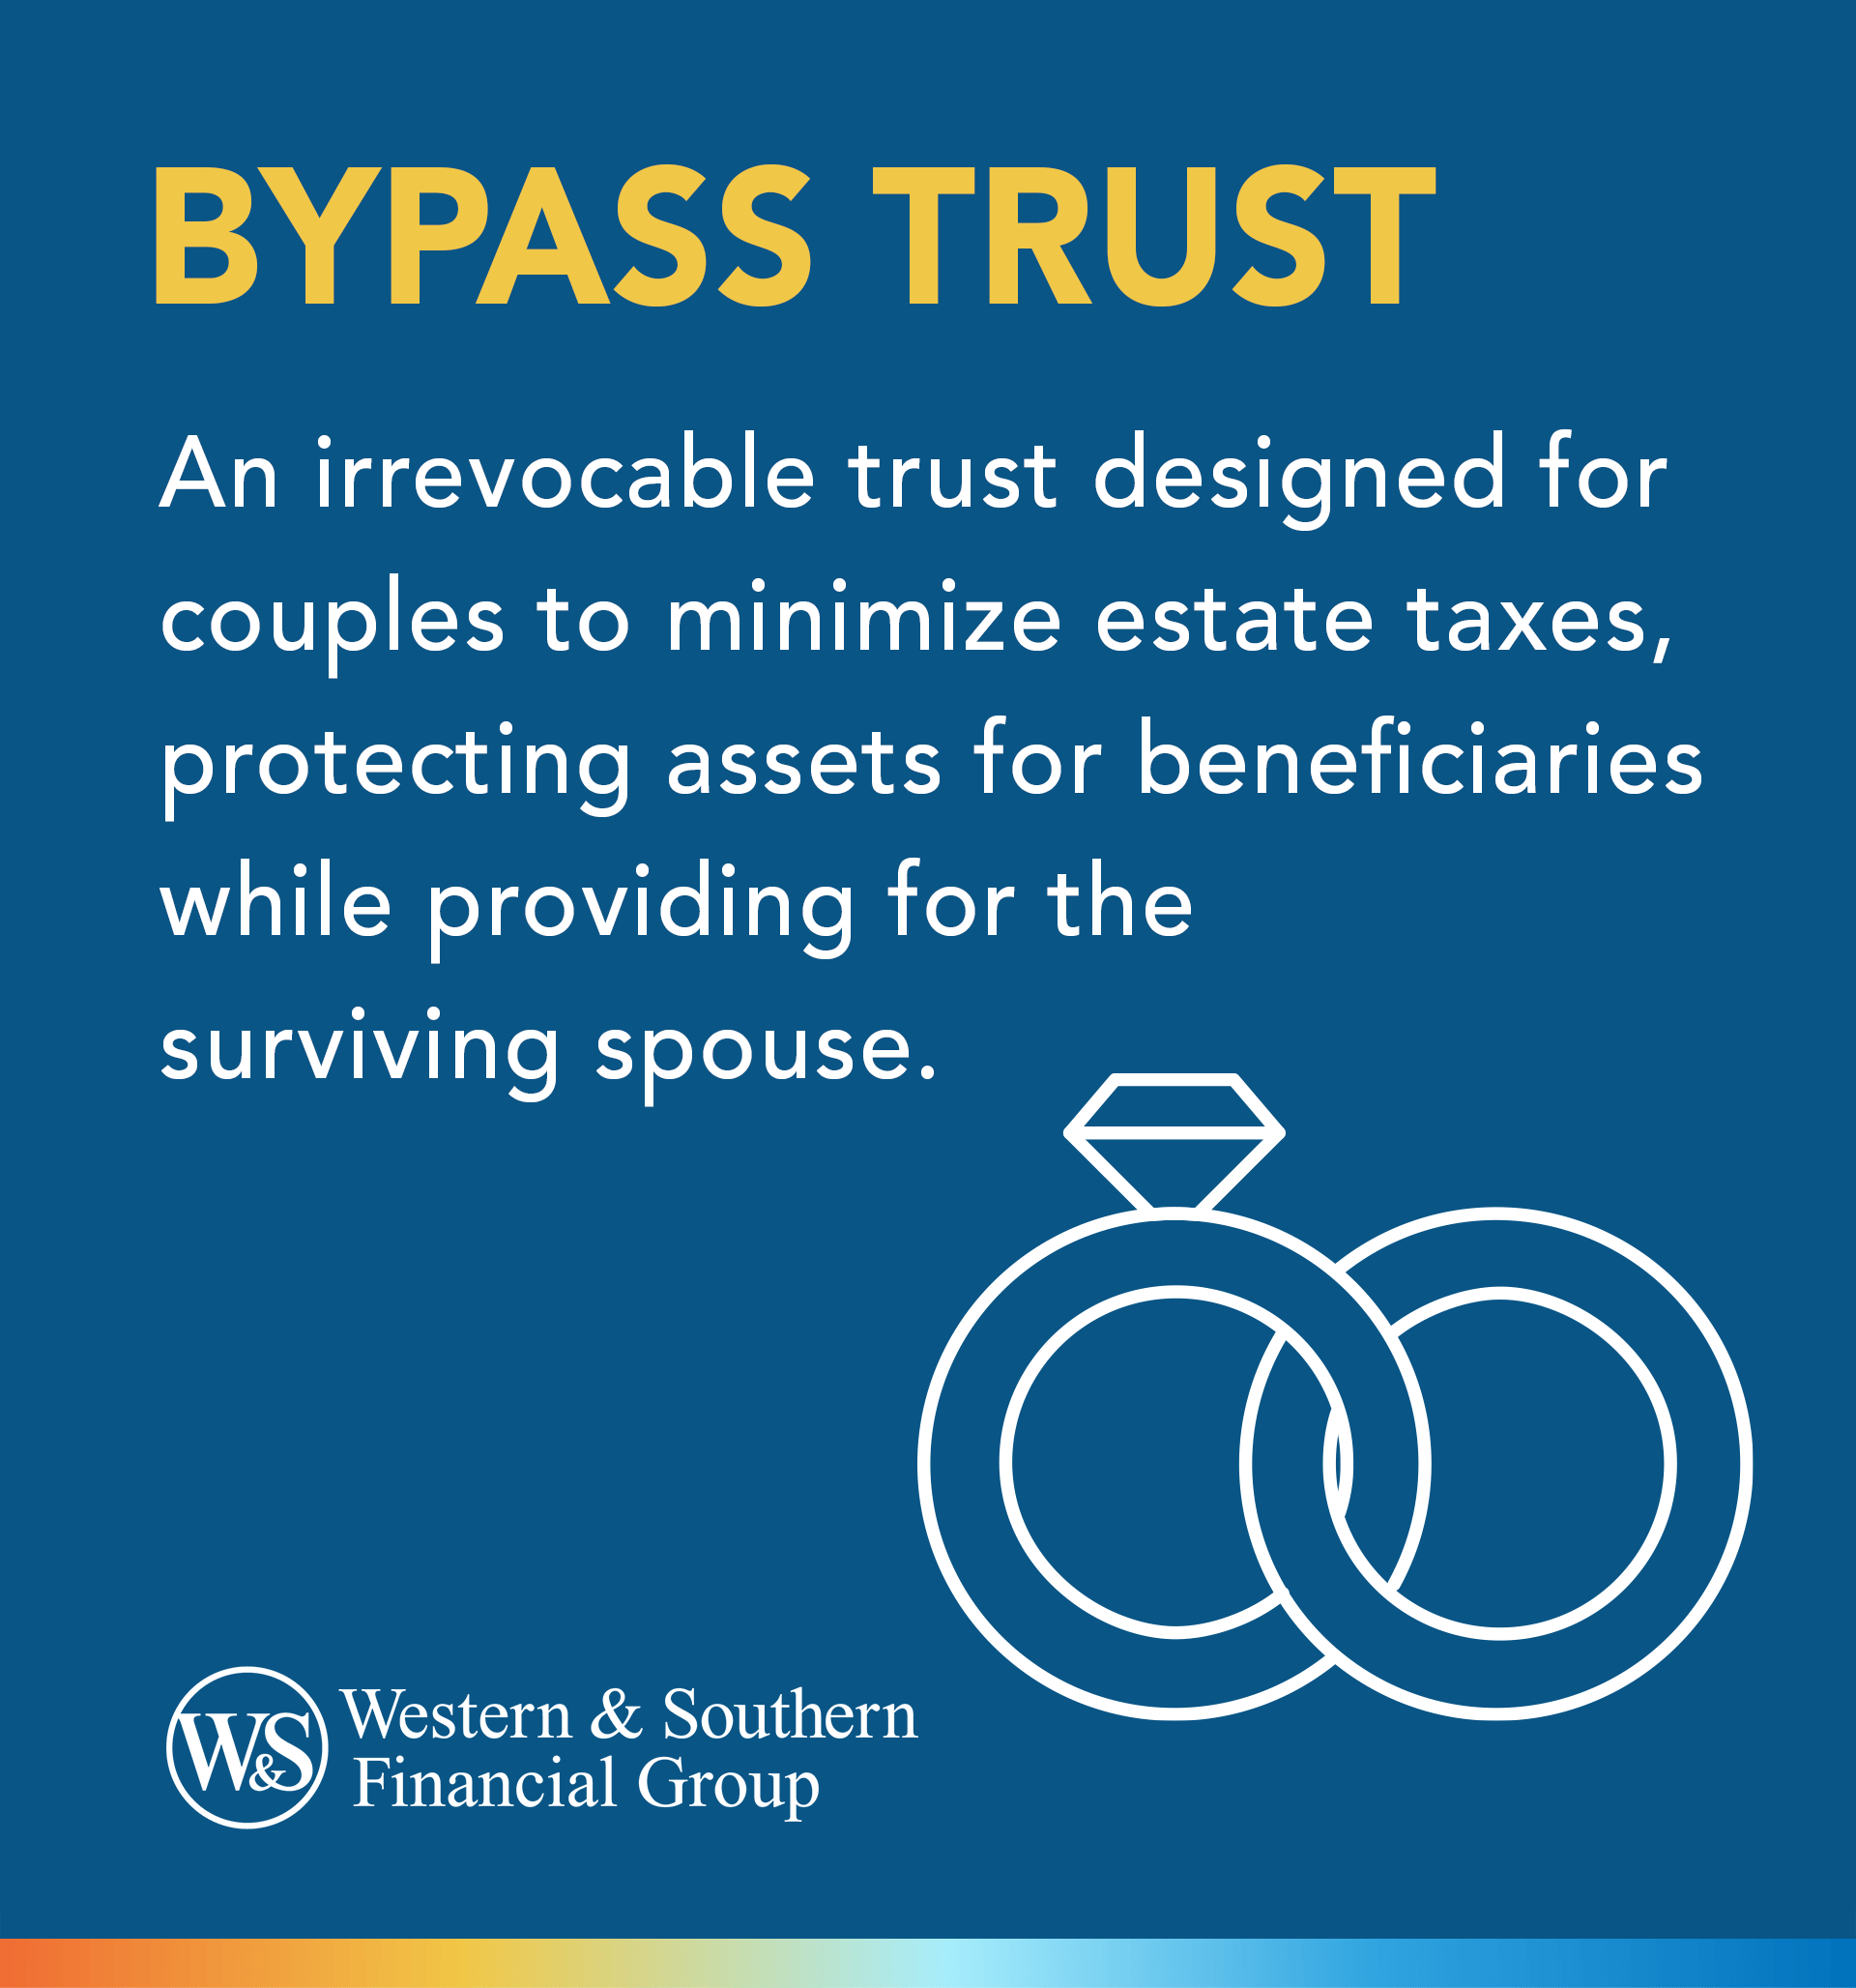 Bypass Trust Definition